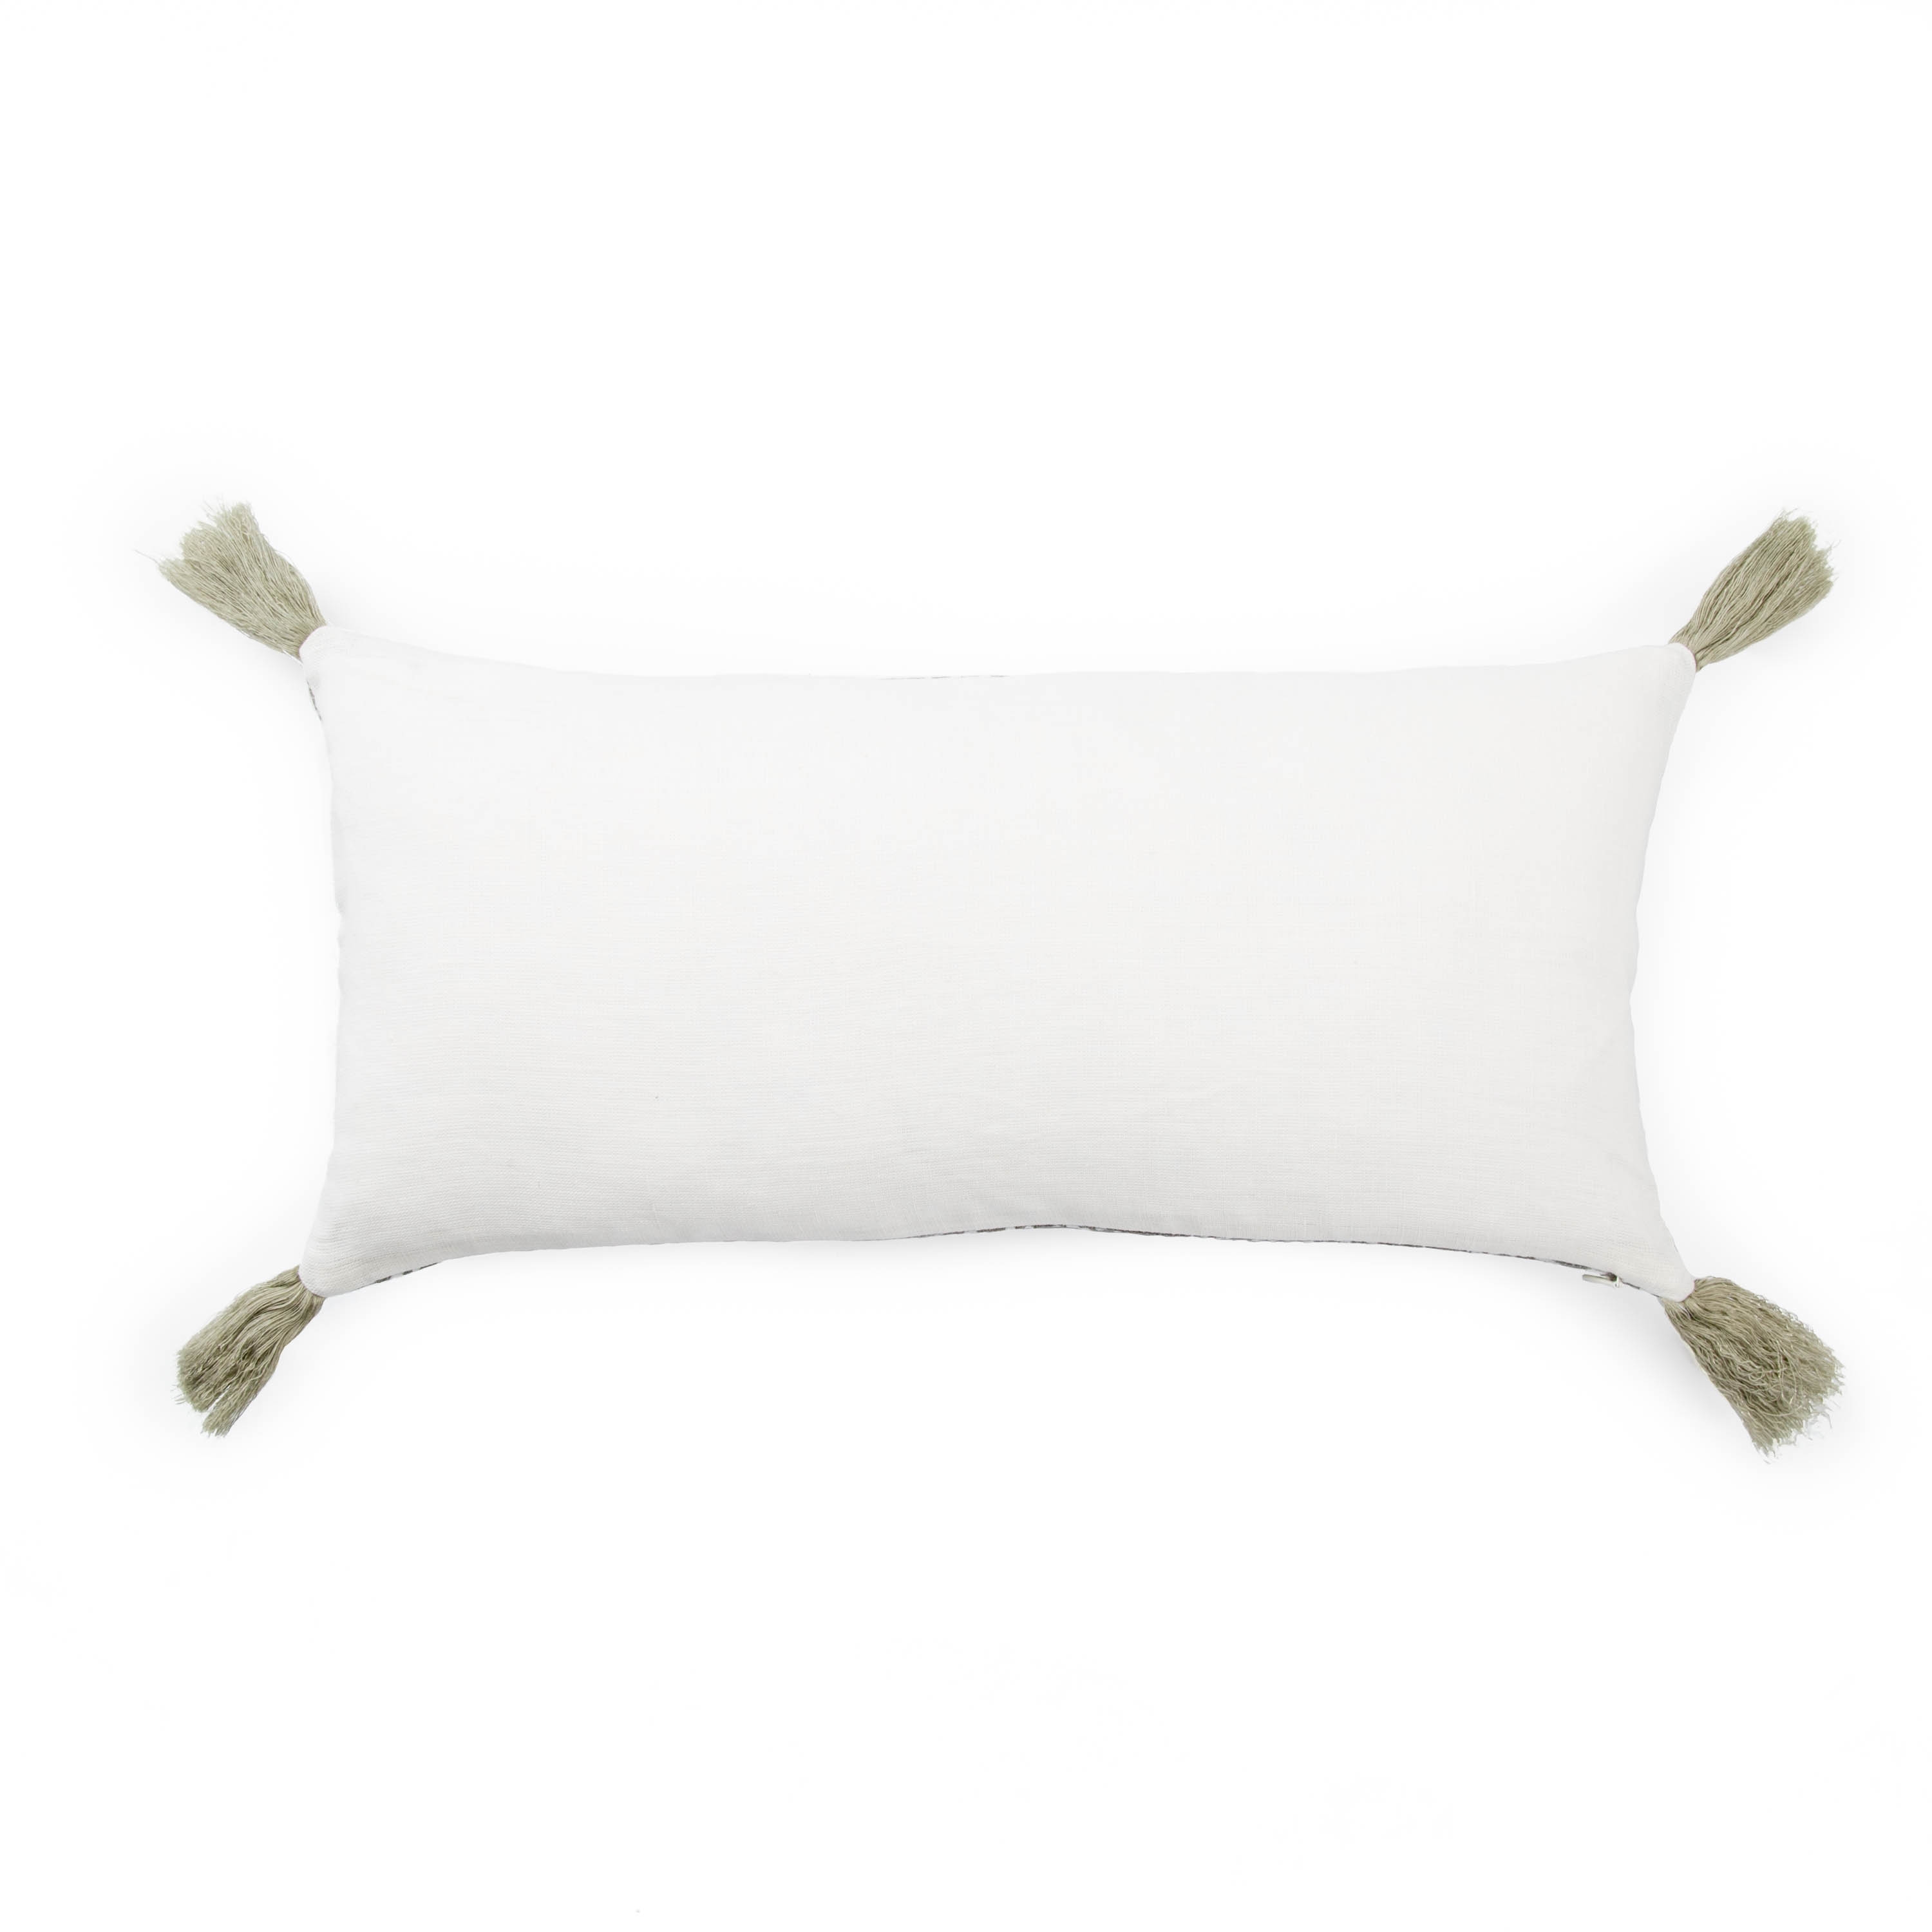 Design (US) Taupe 10"X21" Pillow - Image 1